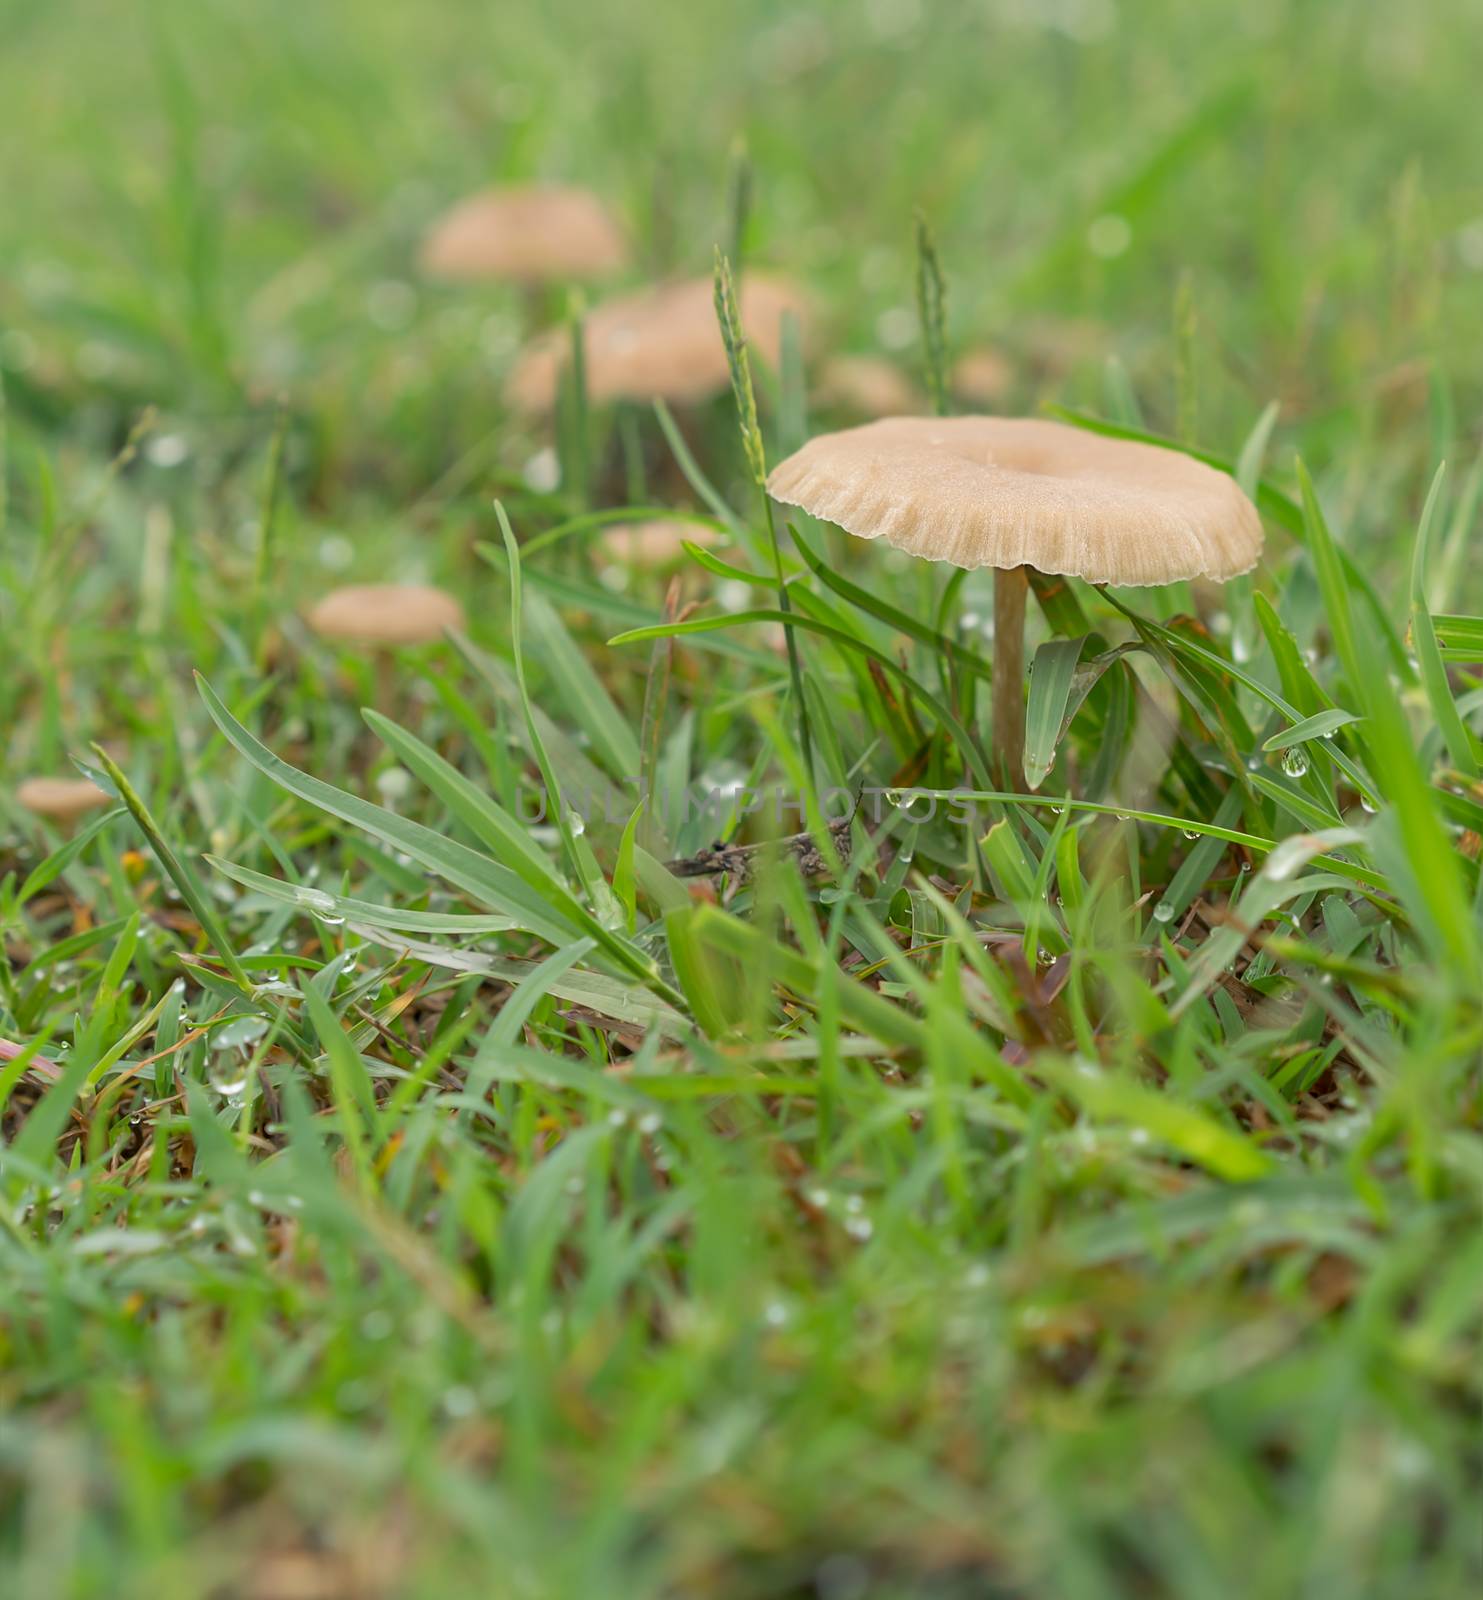 Wet living mushrooms in green grass after rain by sherj